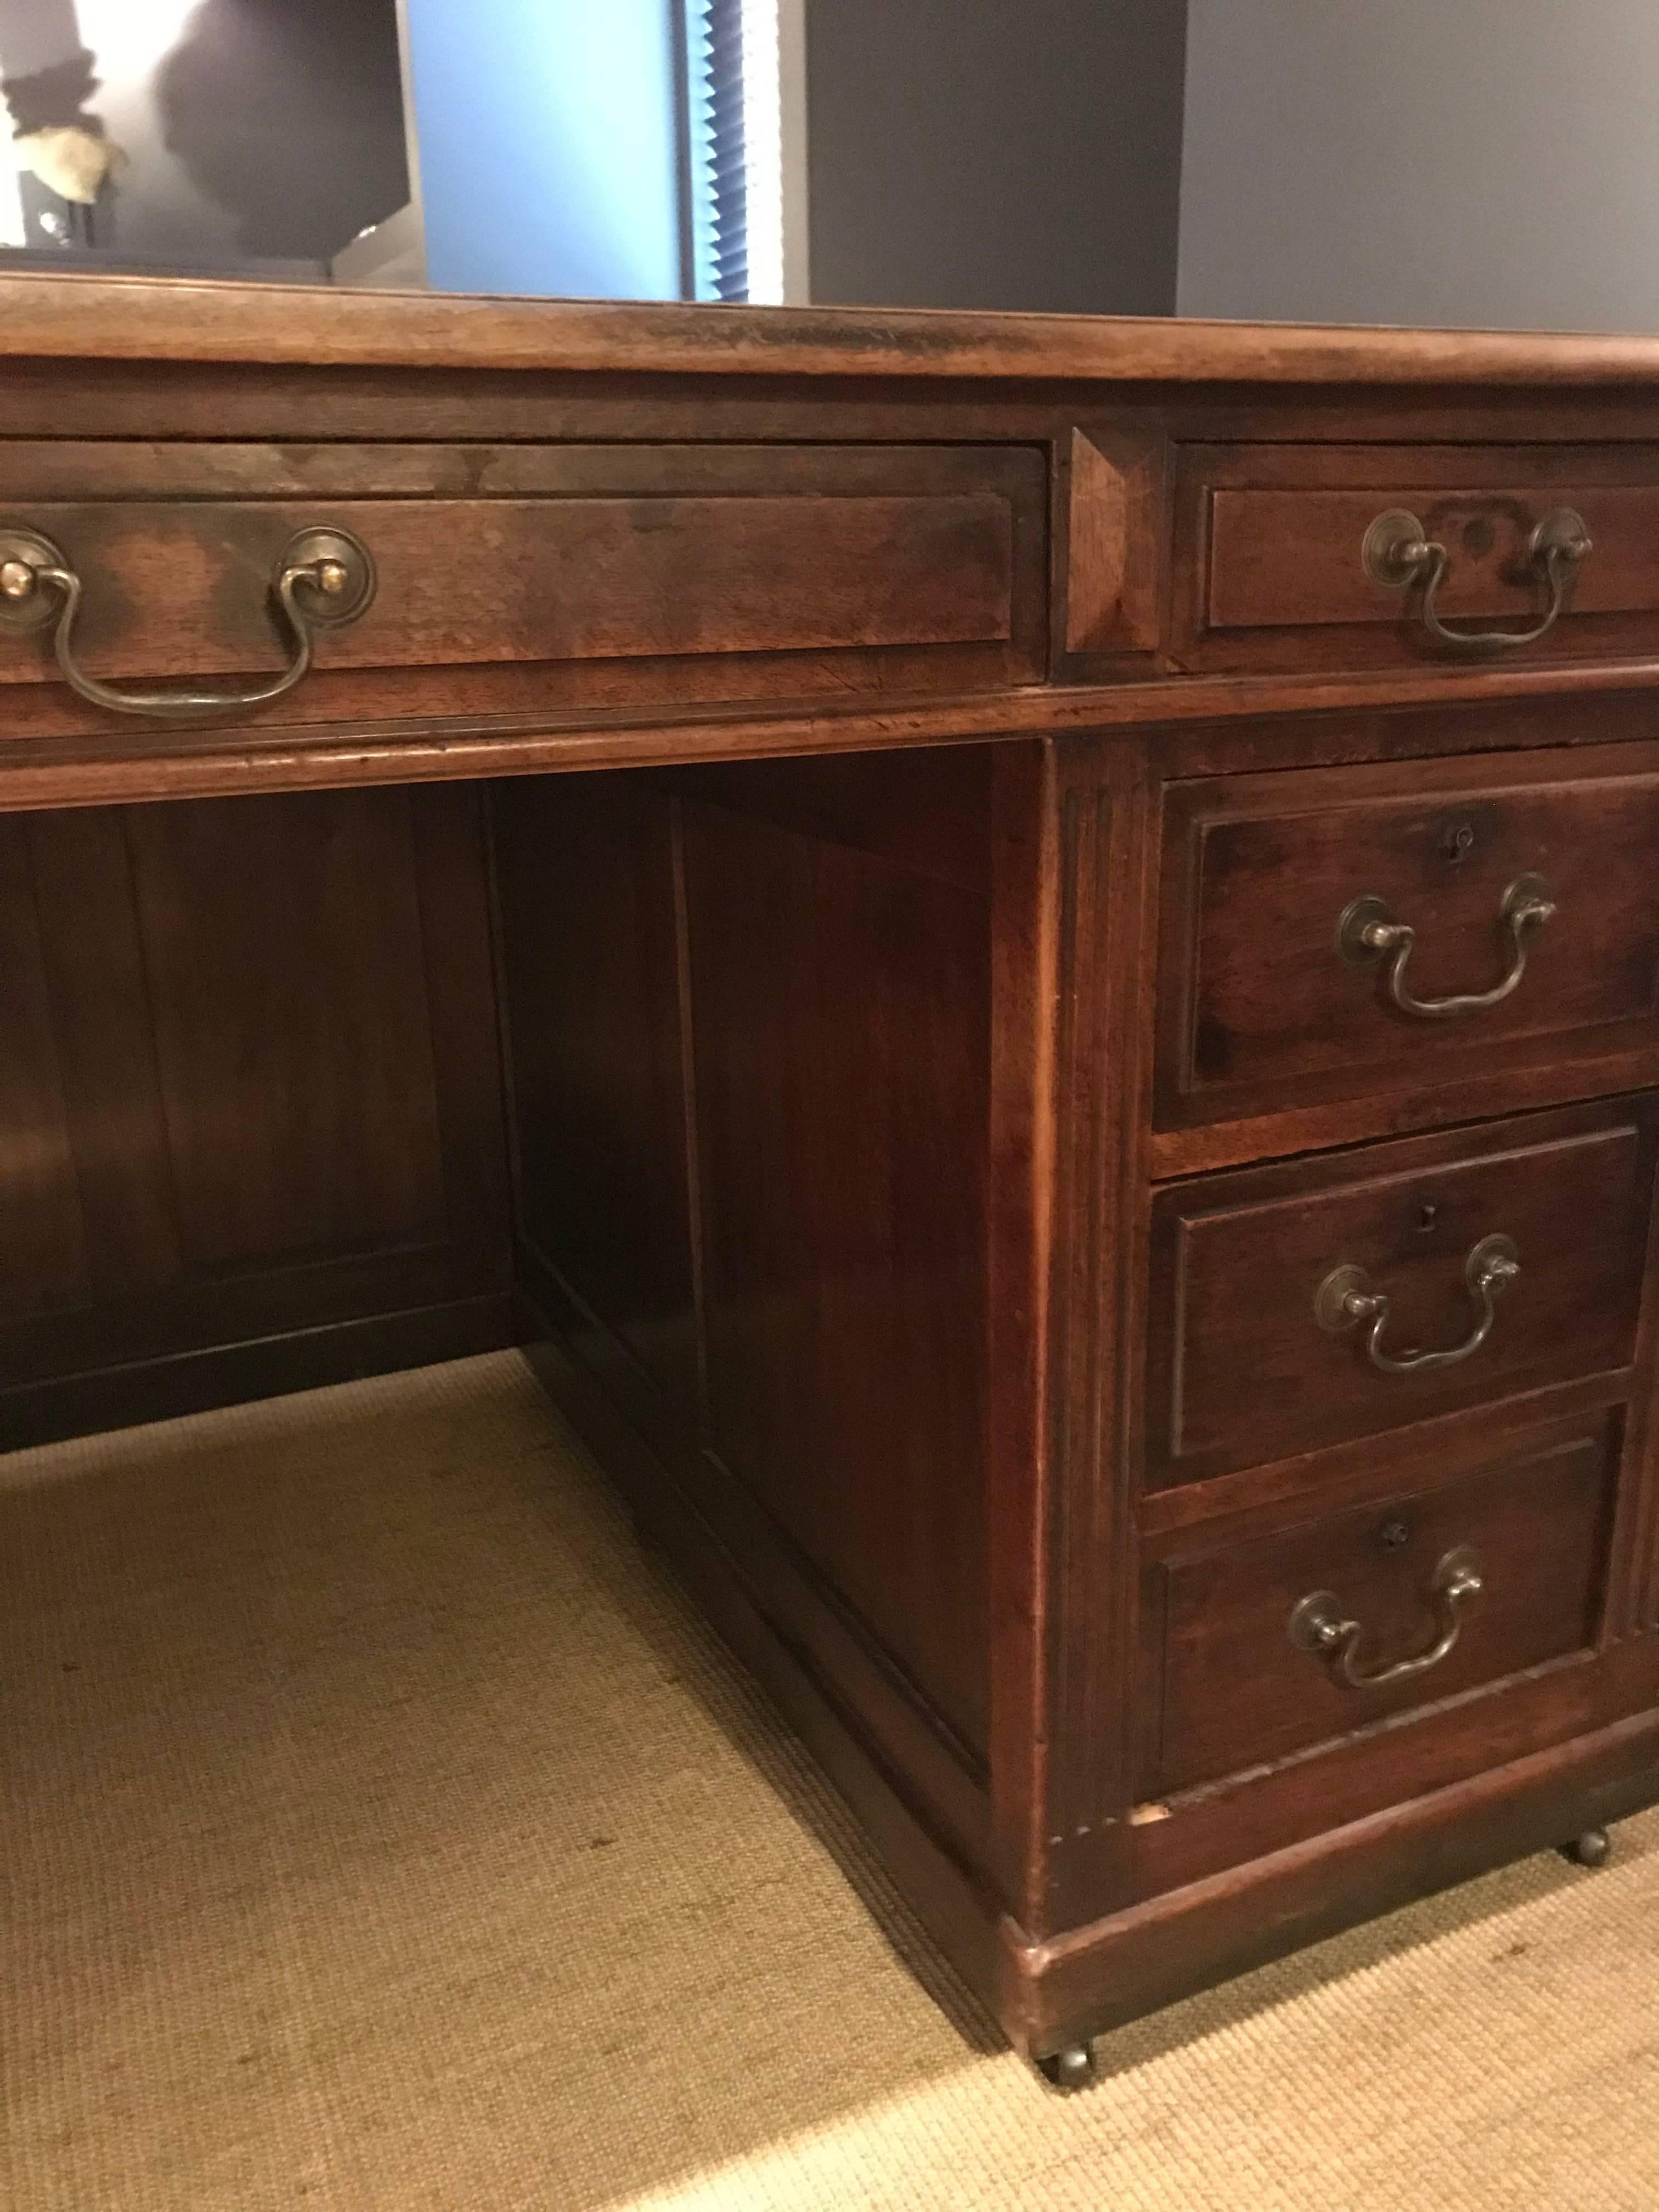 English Mahogany Writing Desk Bureau with nice old patina
9 drawers